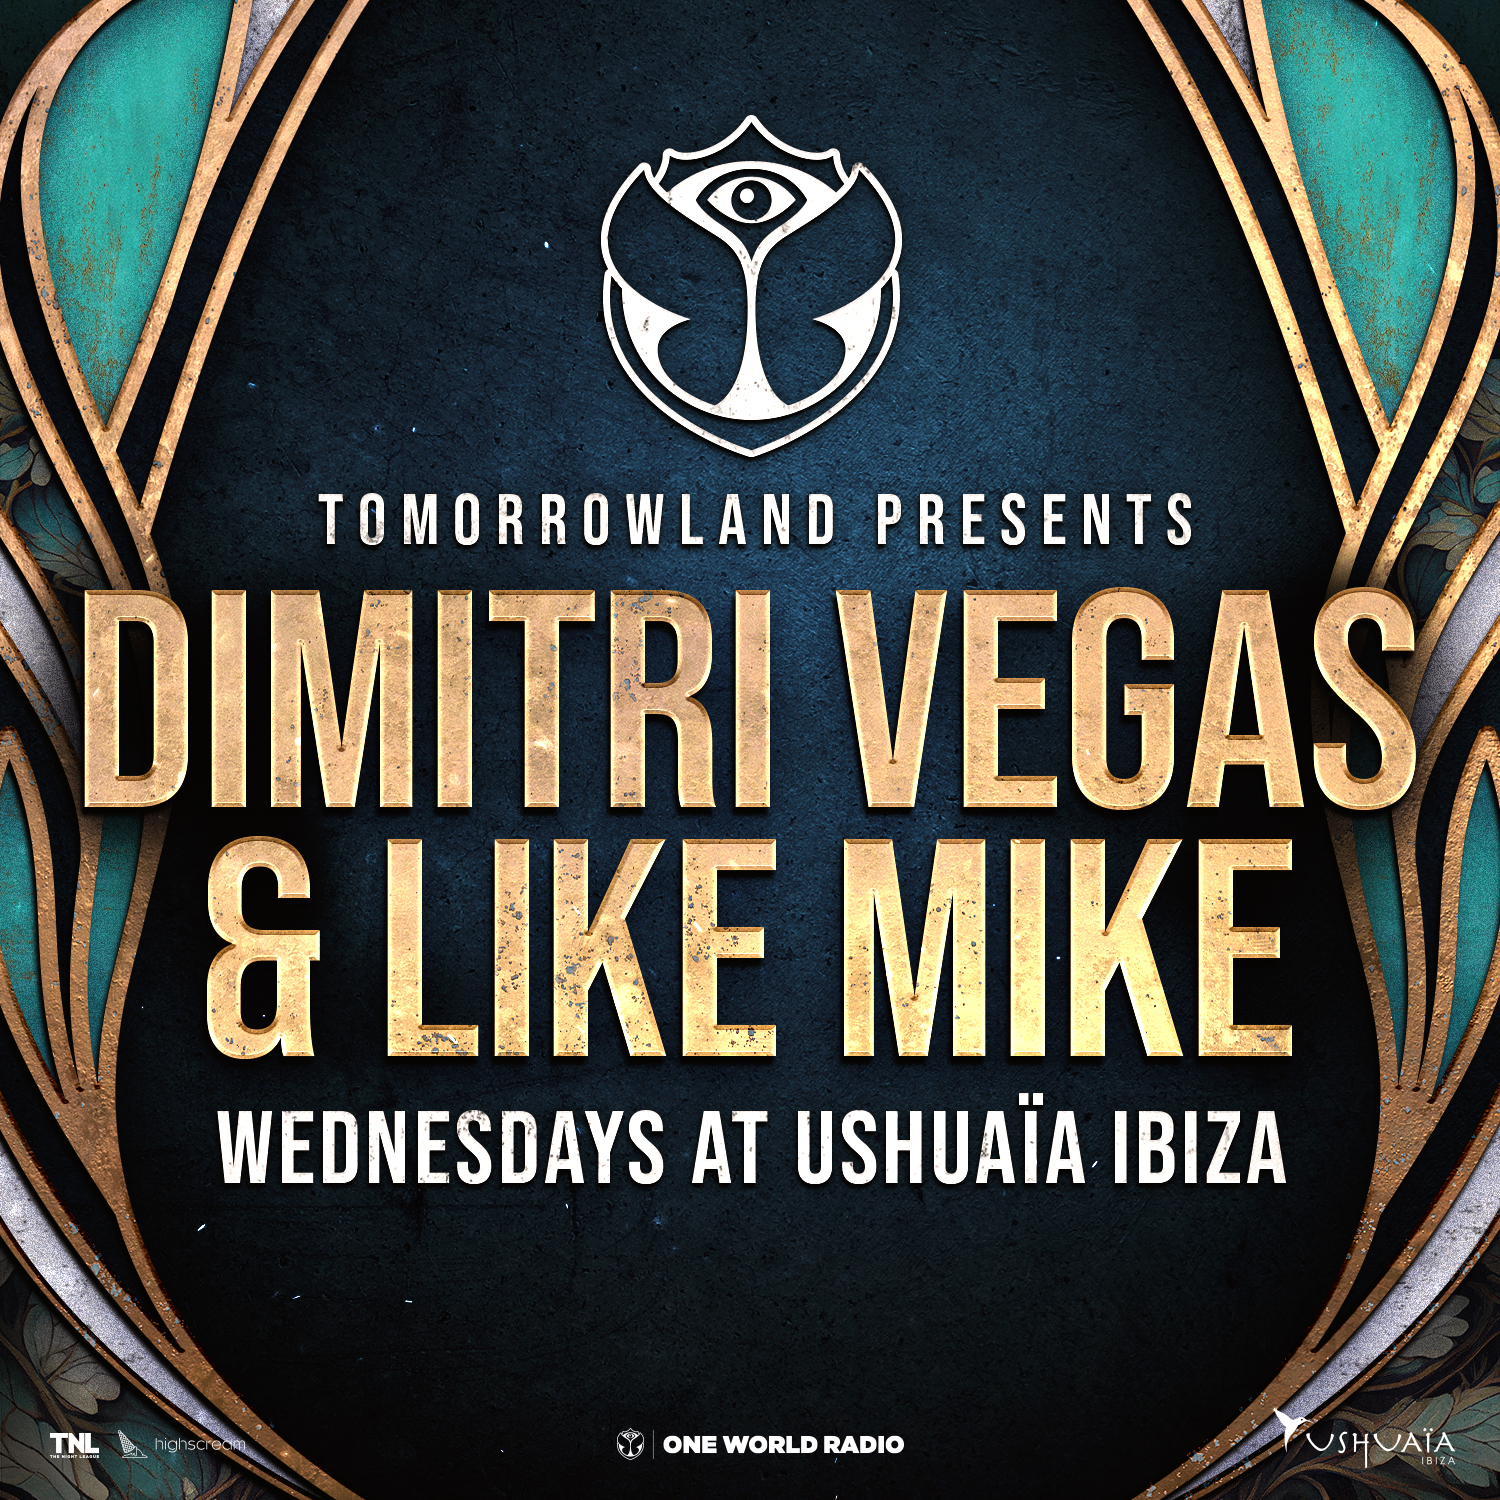 Tomorrowland presents Dimitri Vegas & Like Mike Closing Party - Ushuaïa - Wed 27 Sept